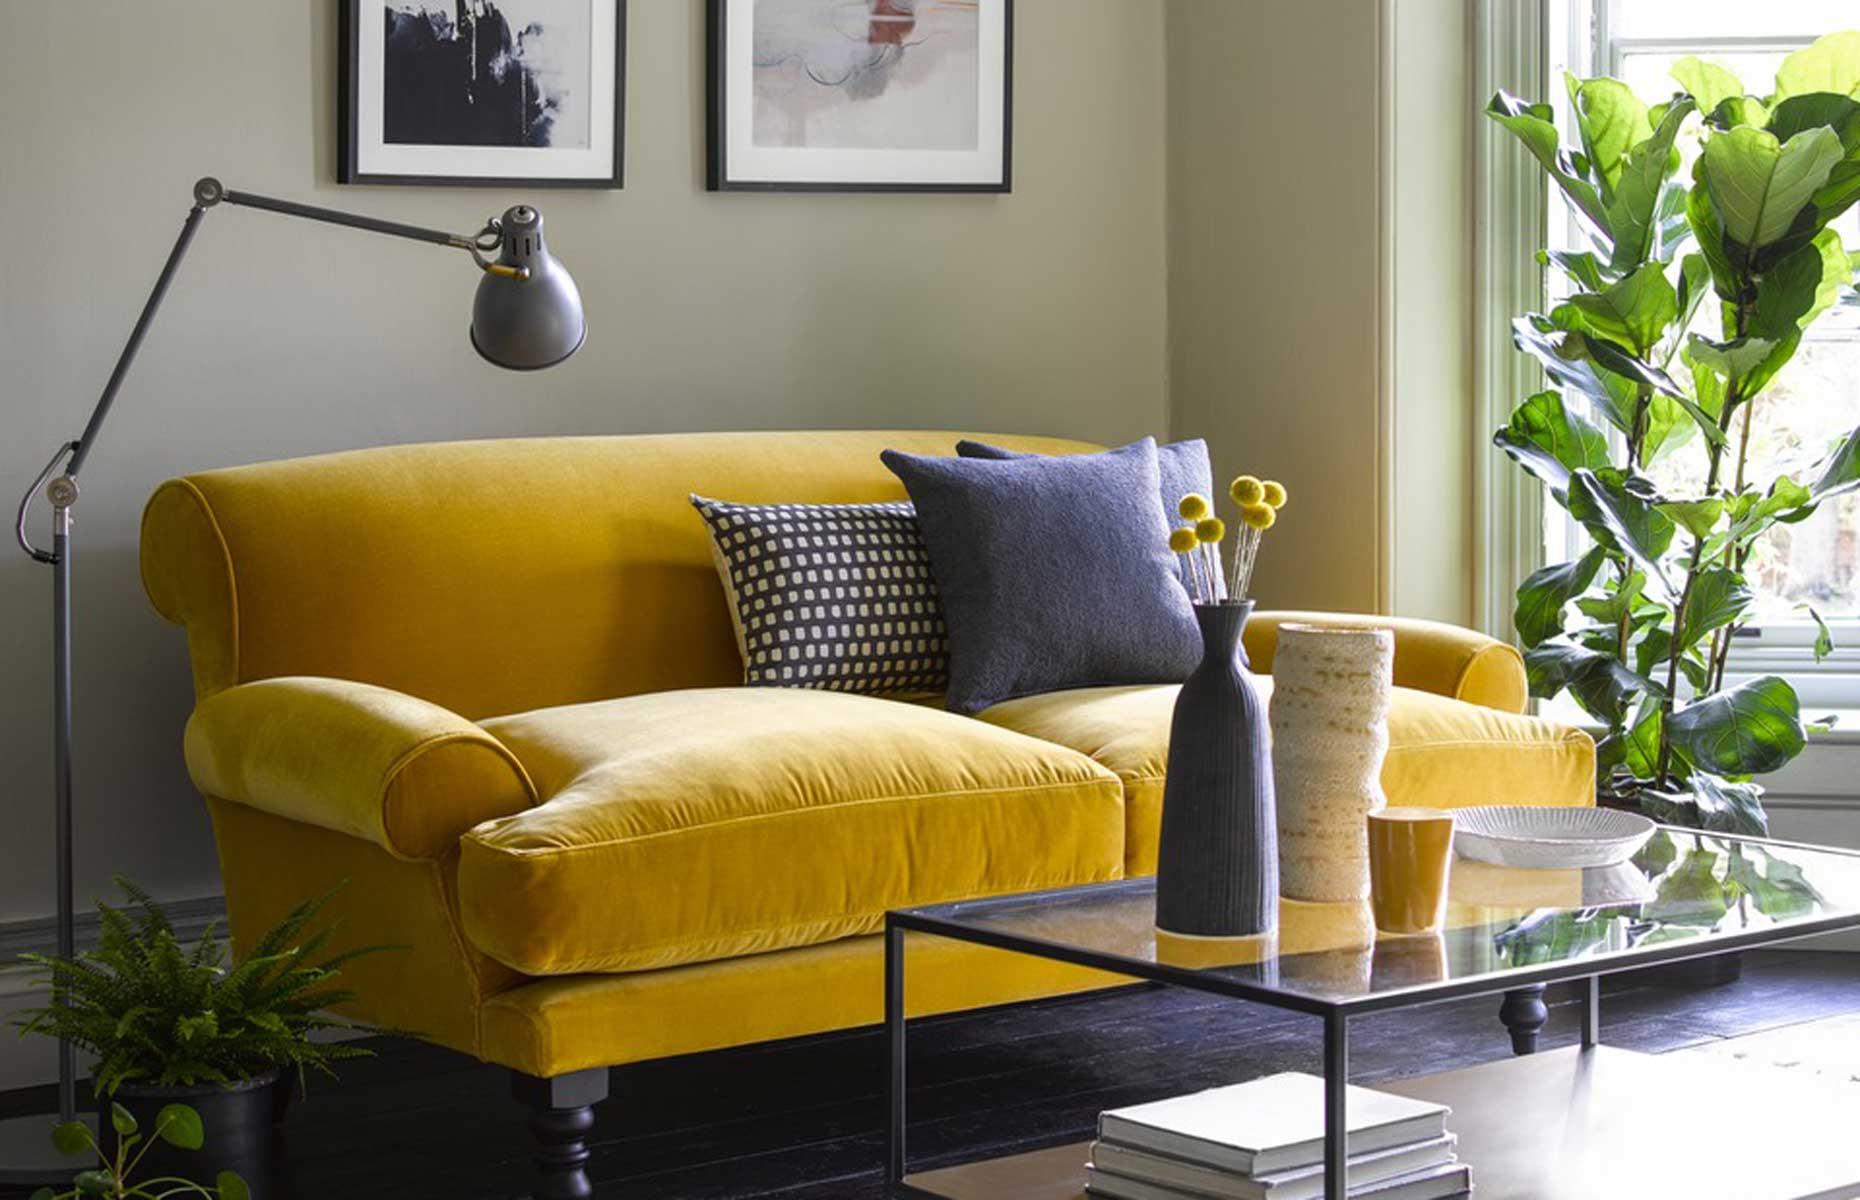 Sarfira With Cream Sofa For Living Room